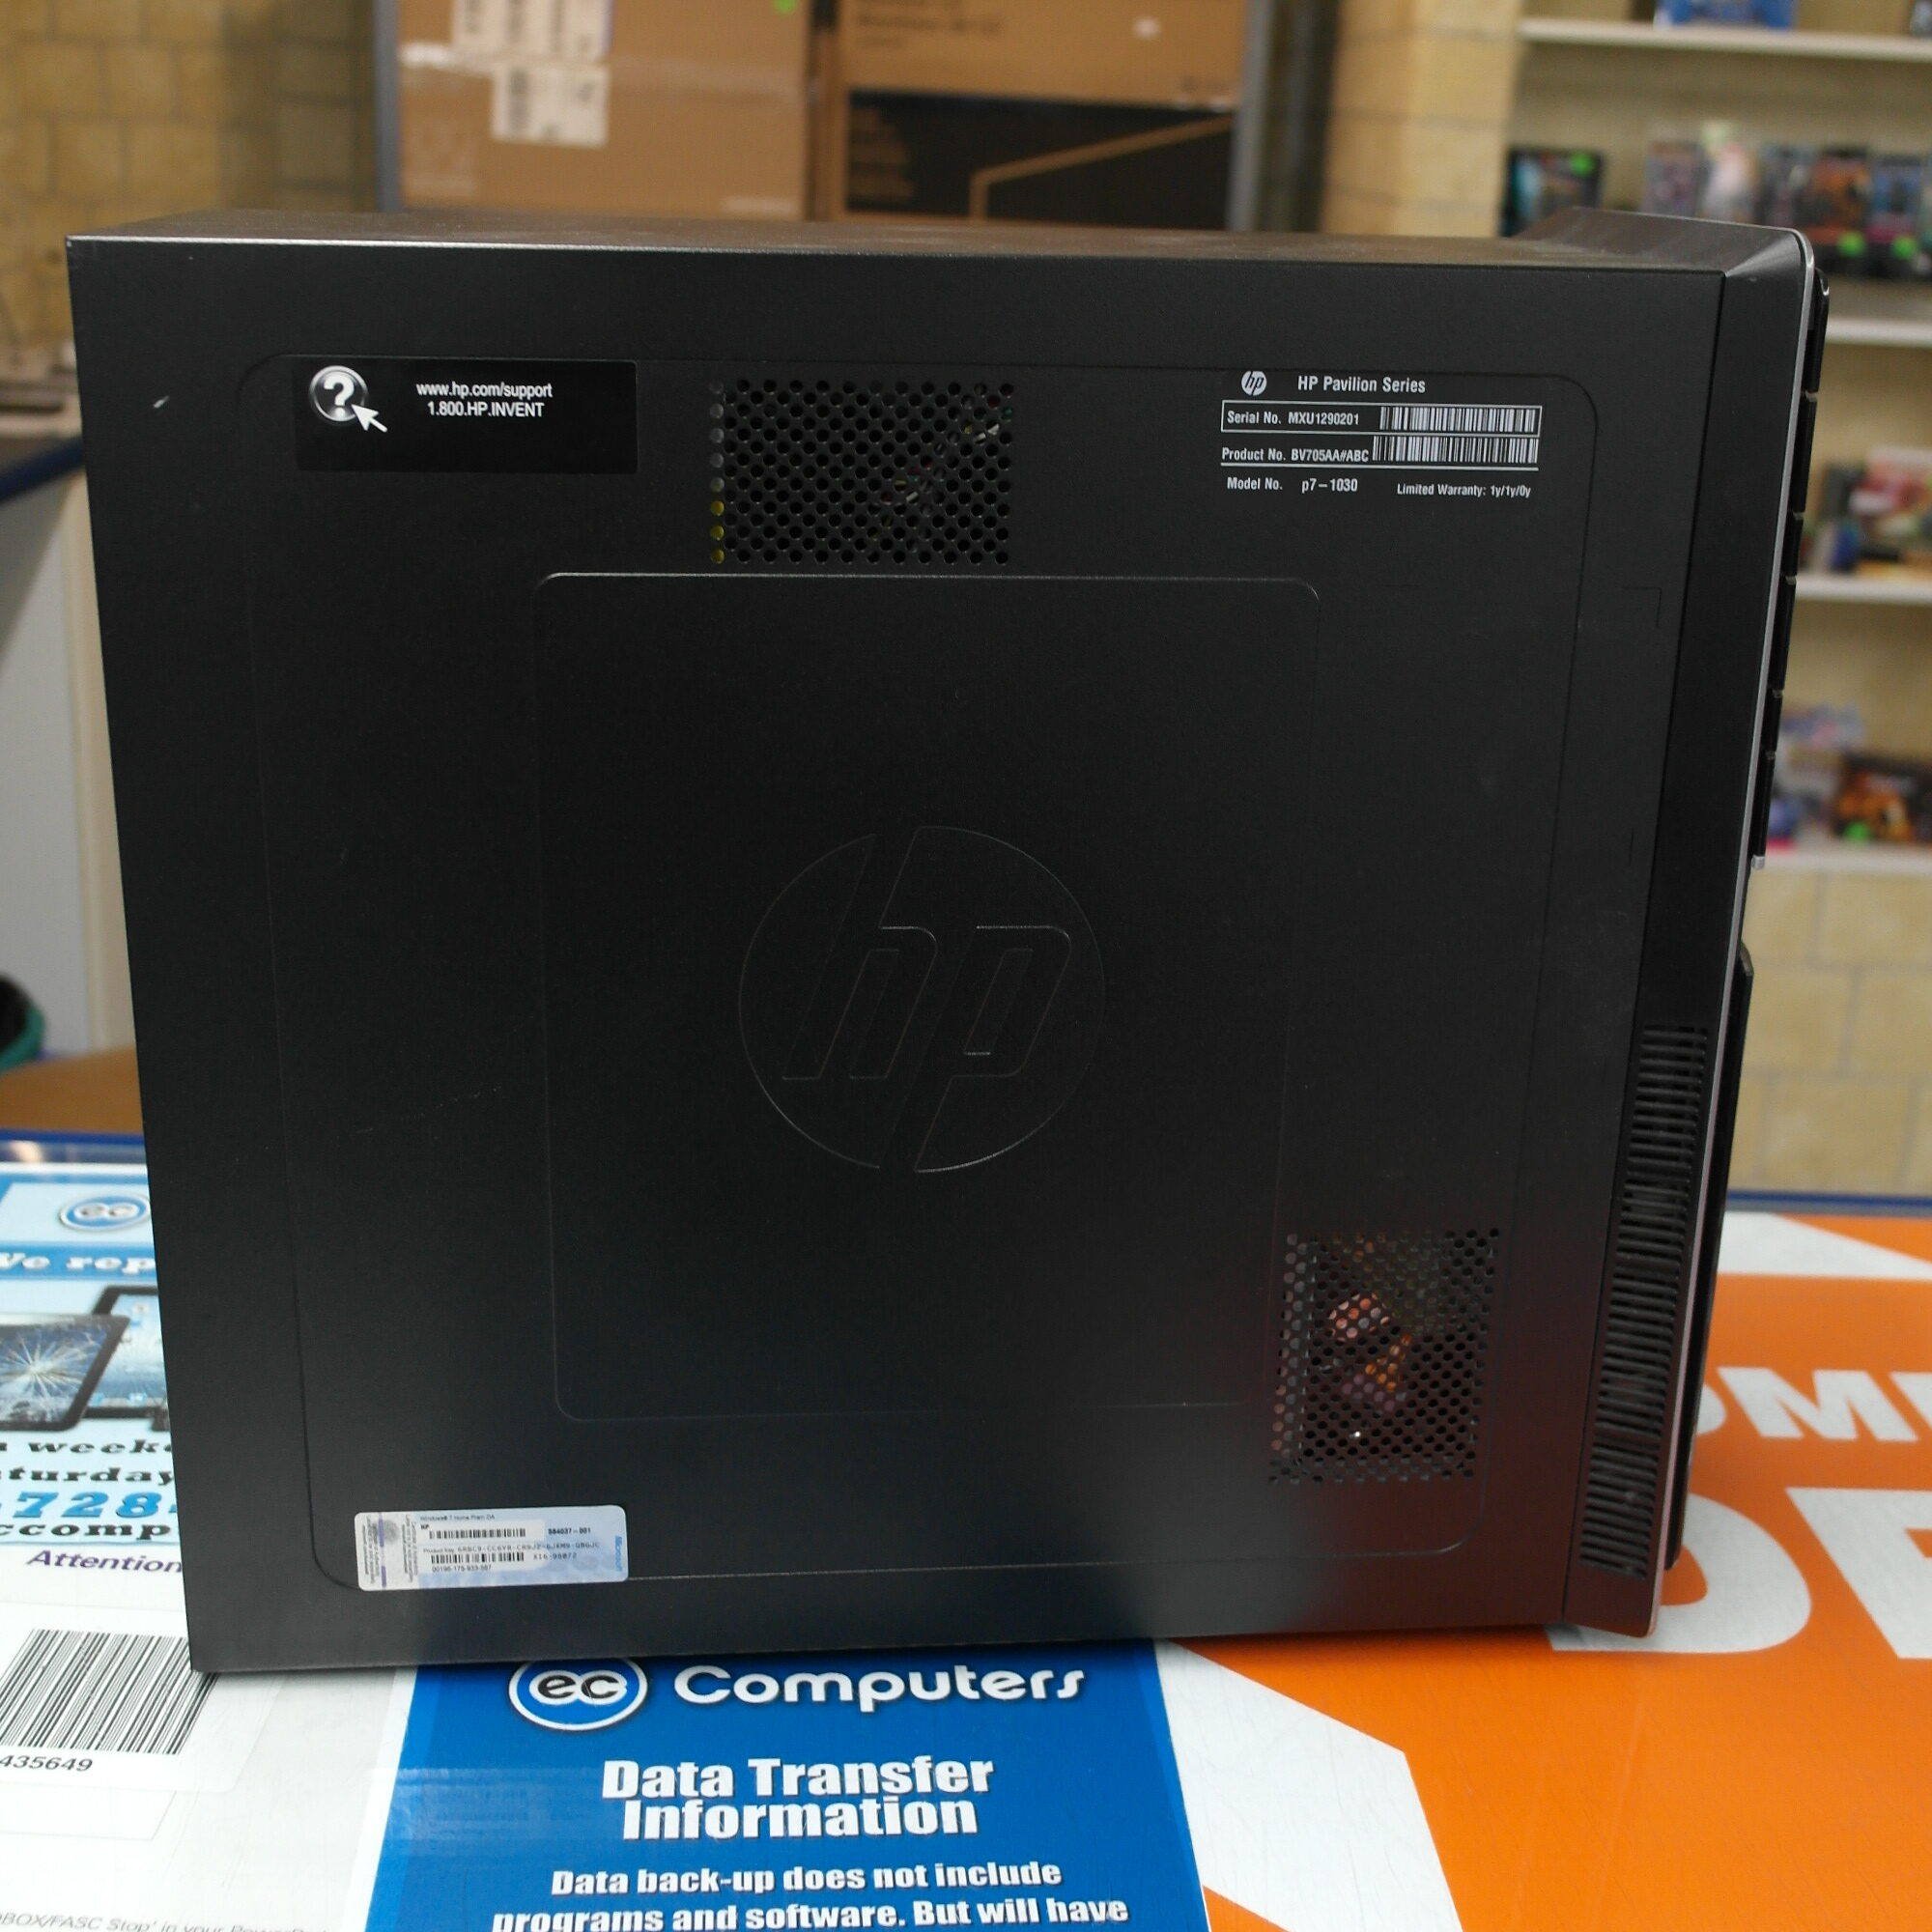 HP Povition HPE Series i7-3770k - デスクトップ型PC